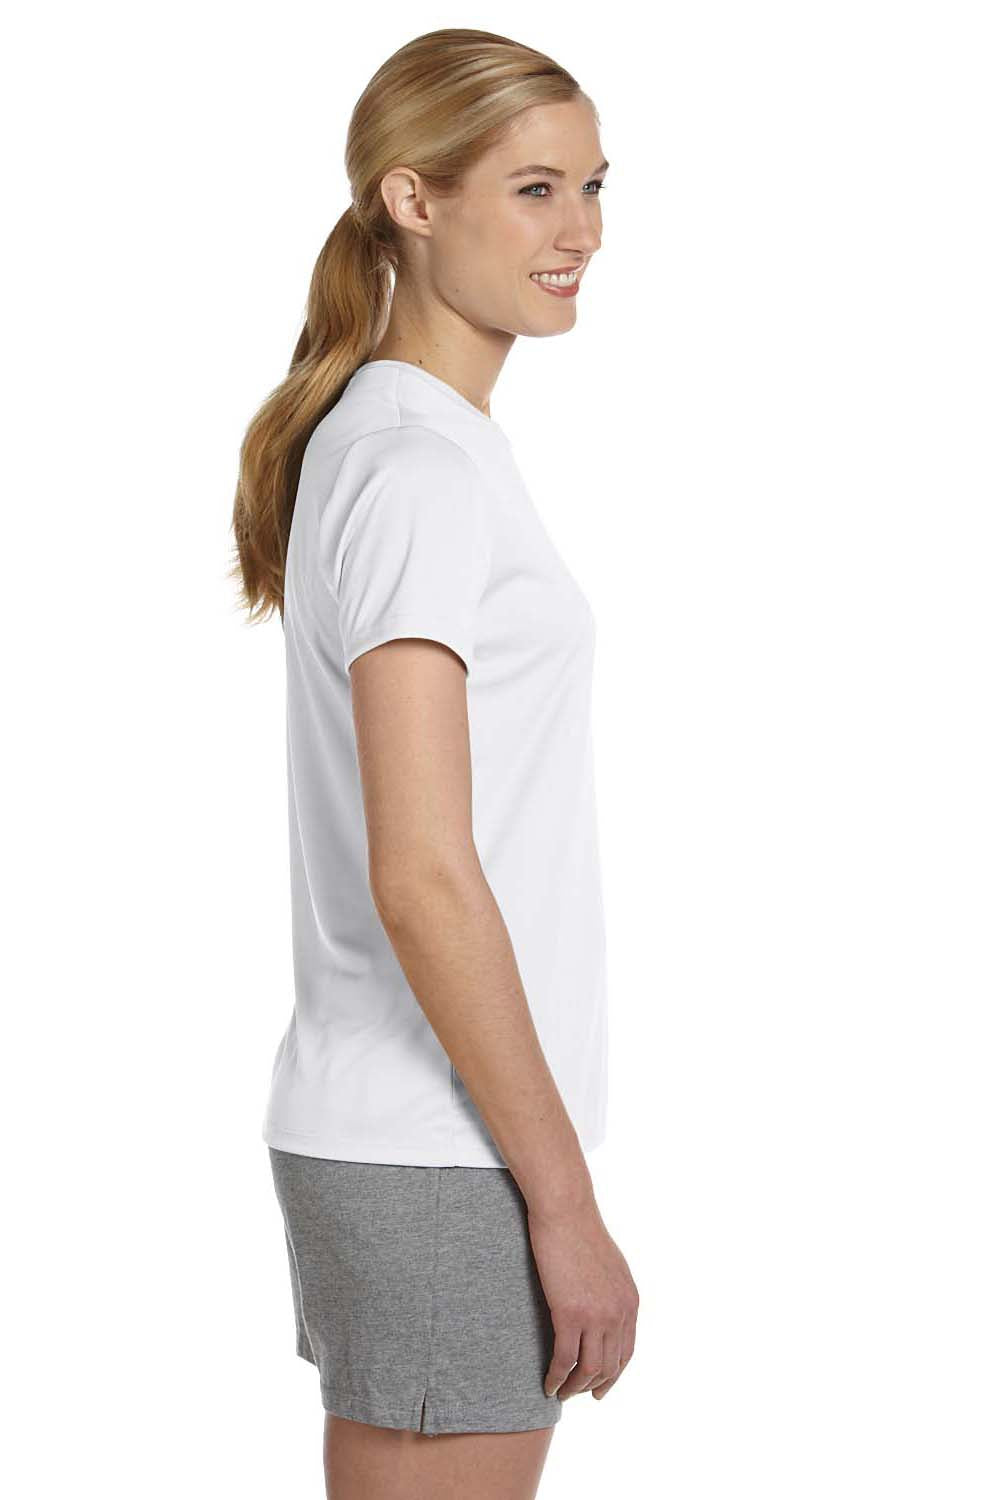 Hanes 4830 Womens Cool DRI FreshIQ Moisture Wicking Short Sleeve Crewneck T-Shirt White Side